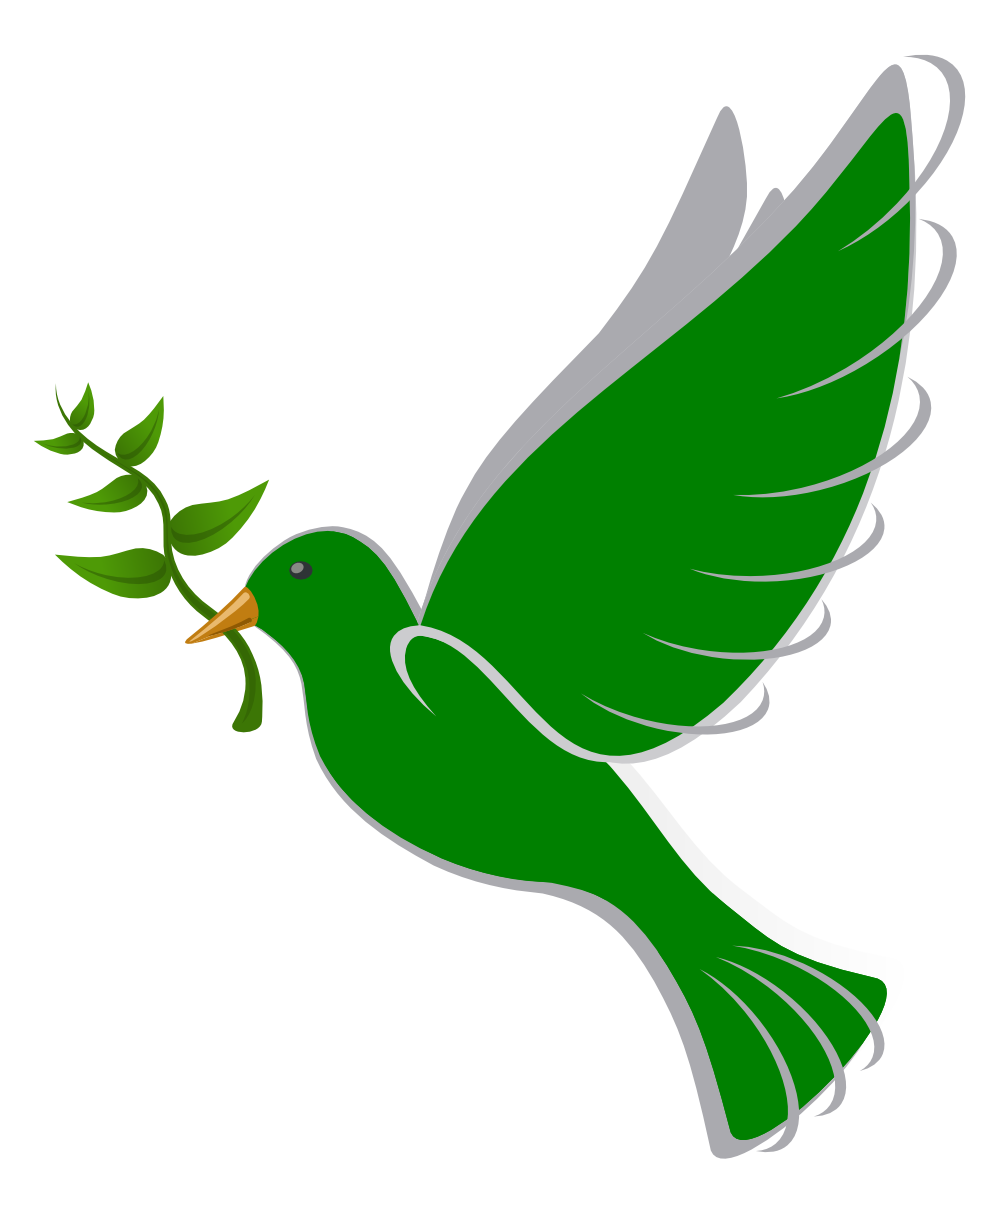 Peace doves clipart